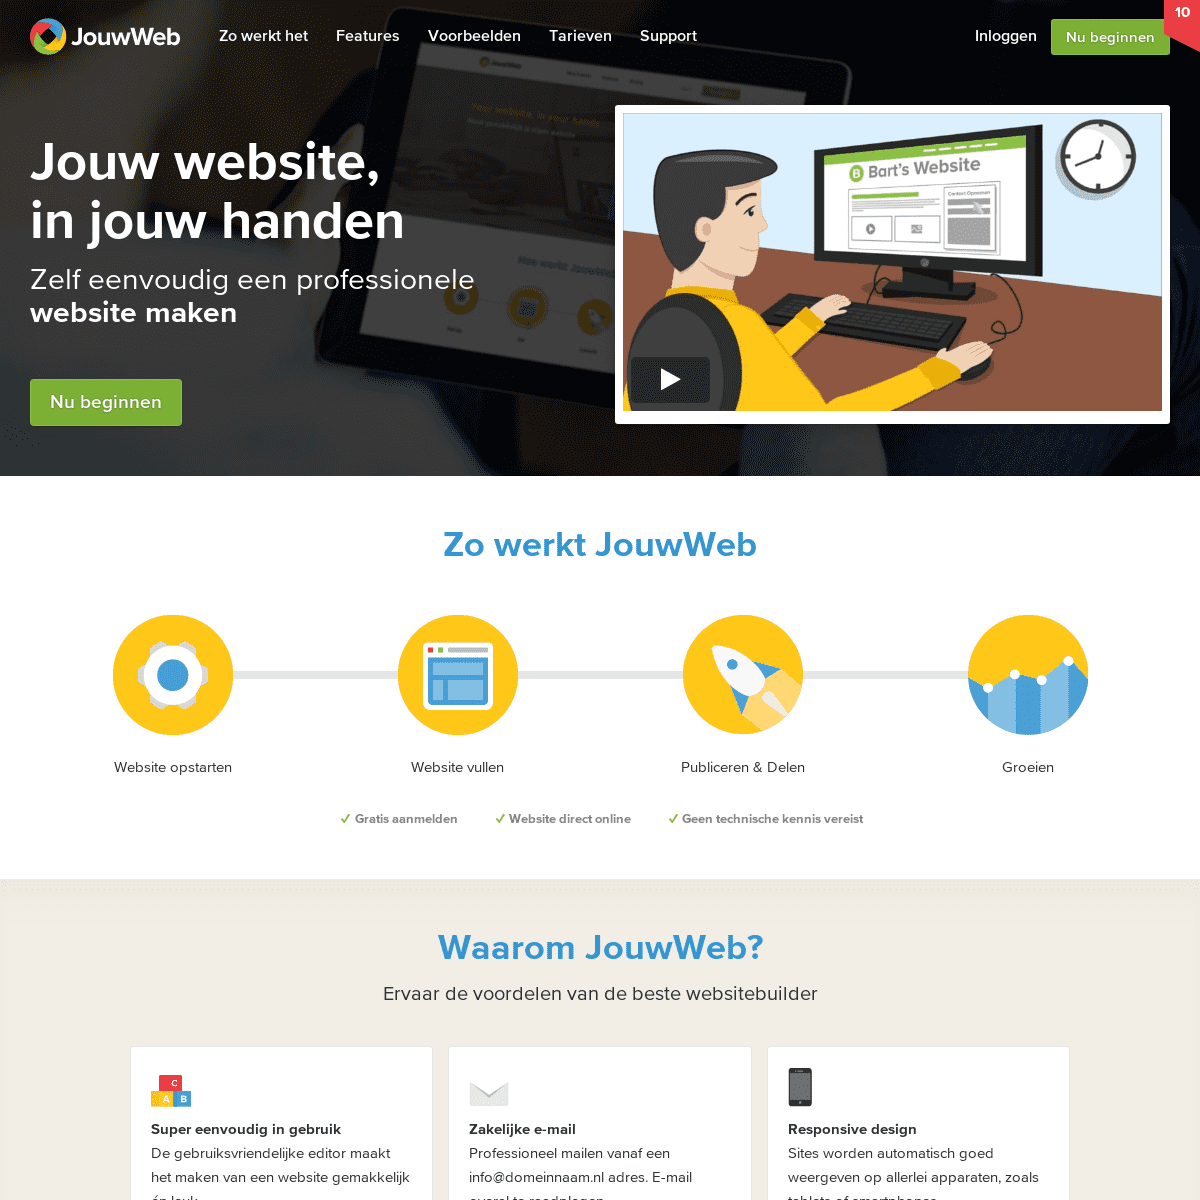 A complete backup of jouwweb.nl